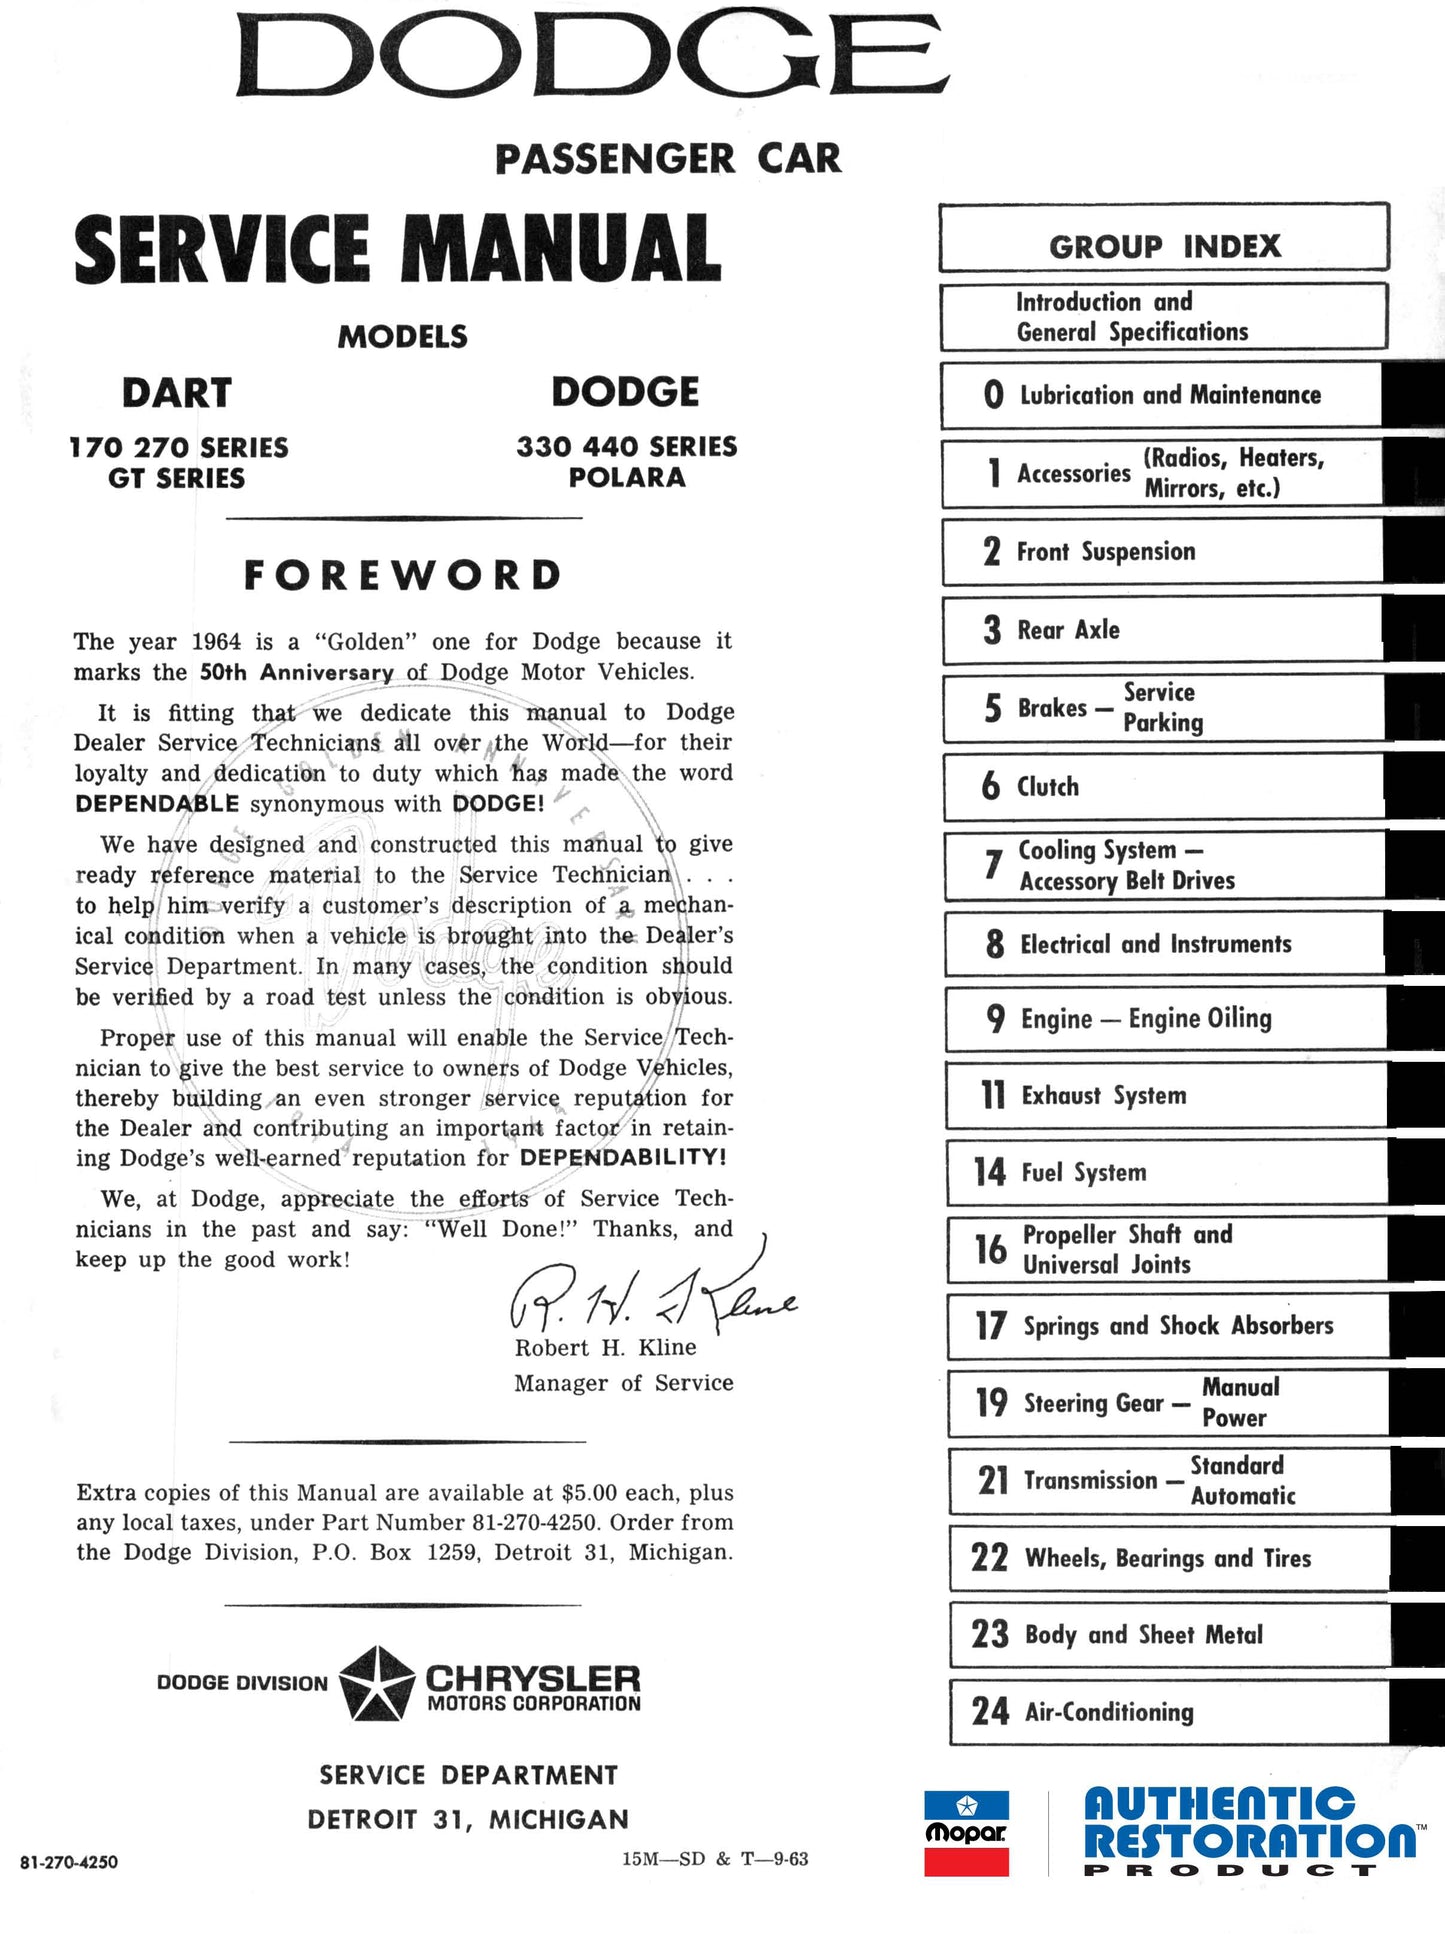 1964 Dodge Service Manual - All Models